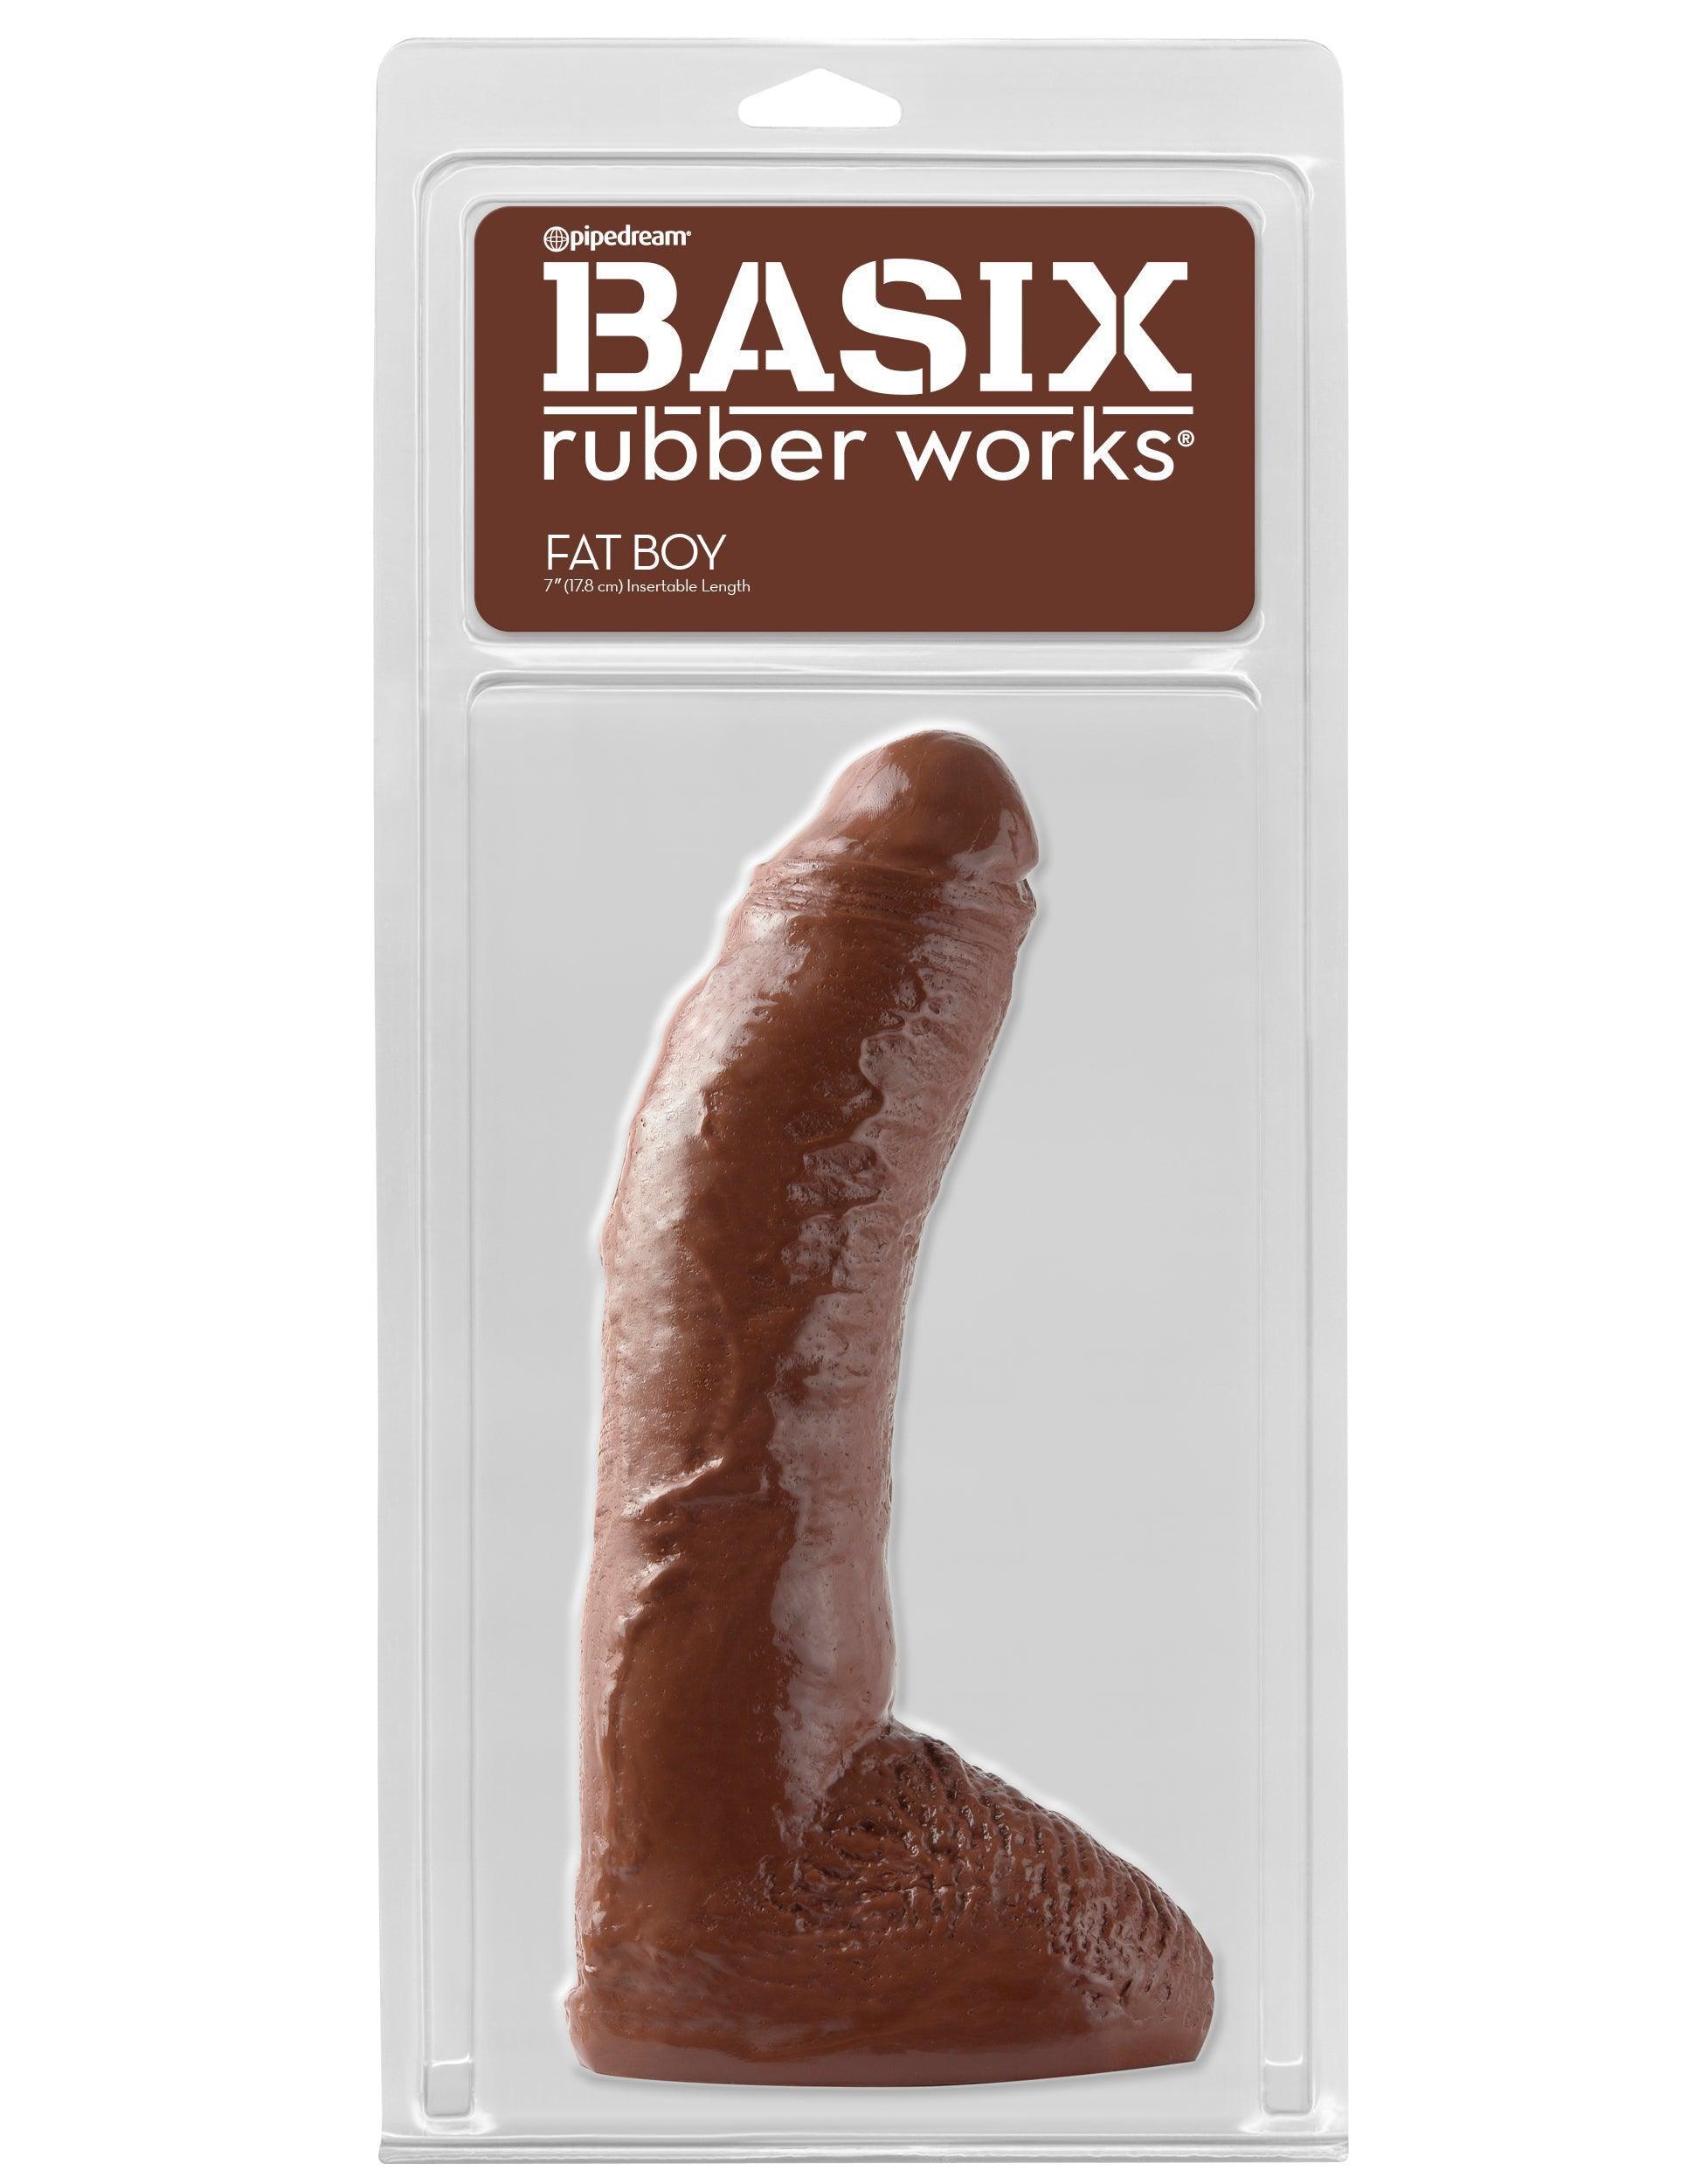 Basix Rubber Works - 10 Inch Fat Boy - Brown - My Sex Toy Hub